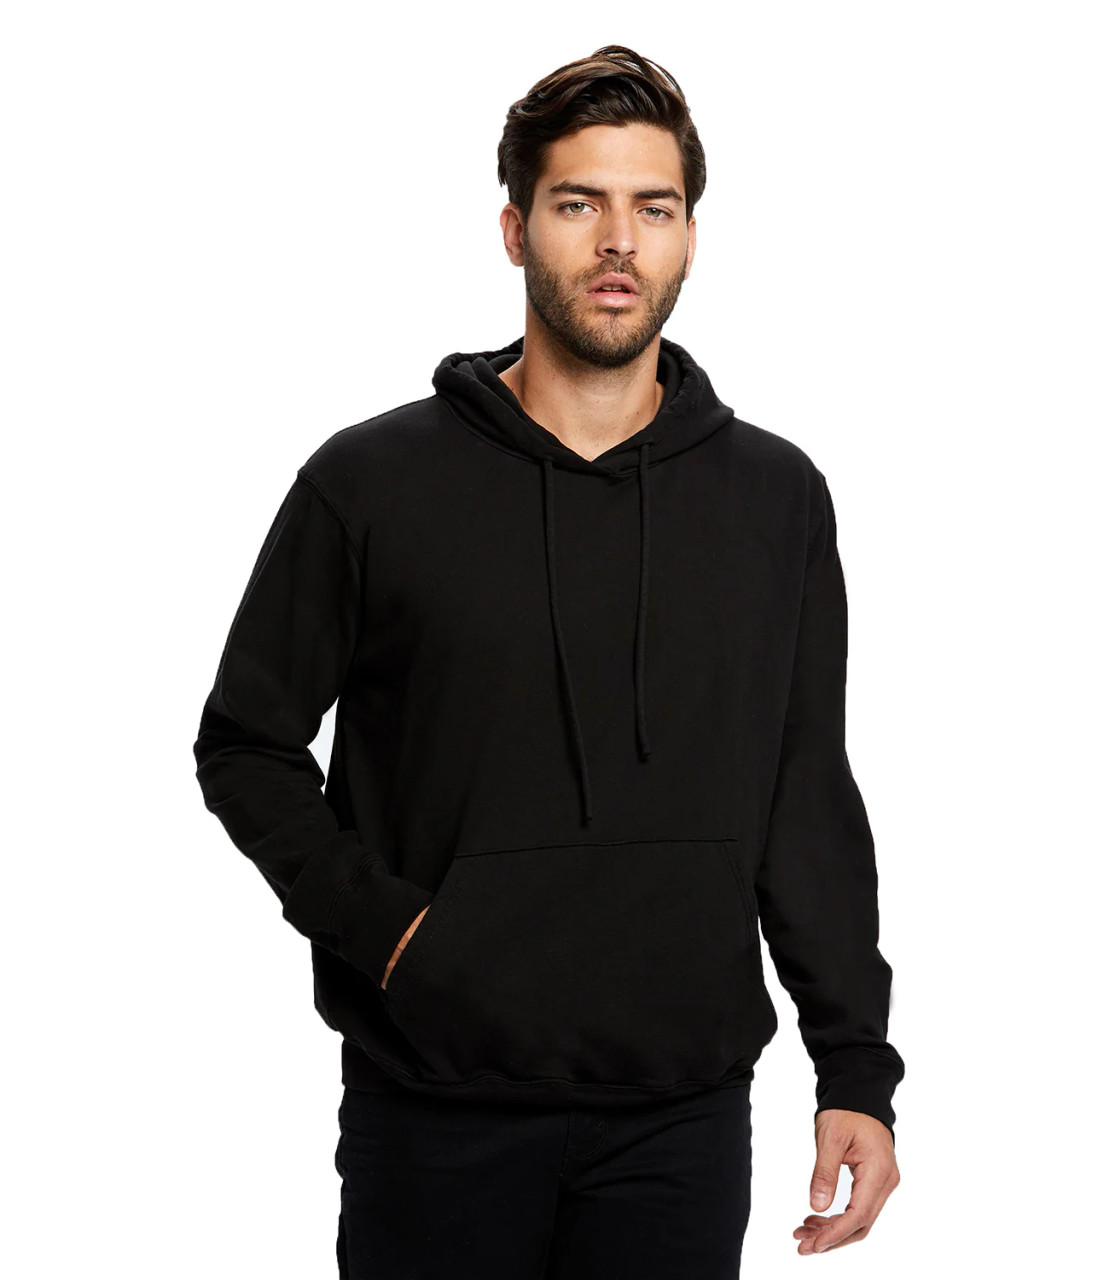 The USA Essential Sweatshirt - 100% Cotton Hoody